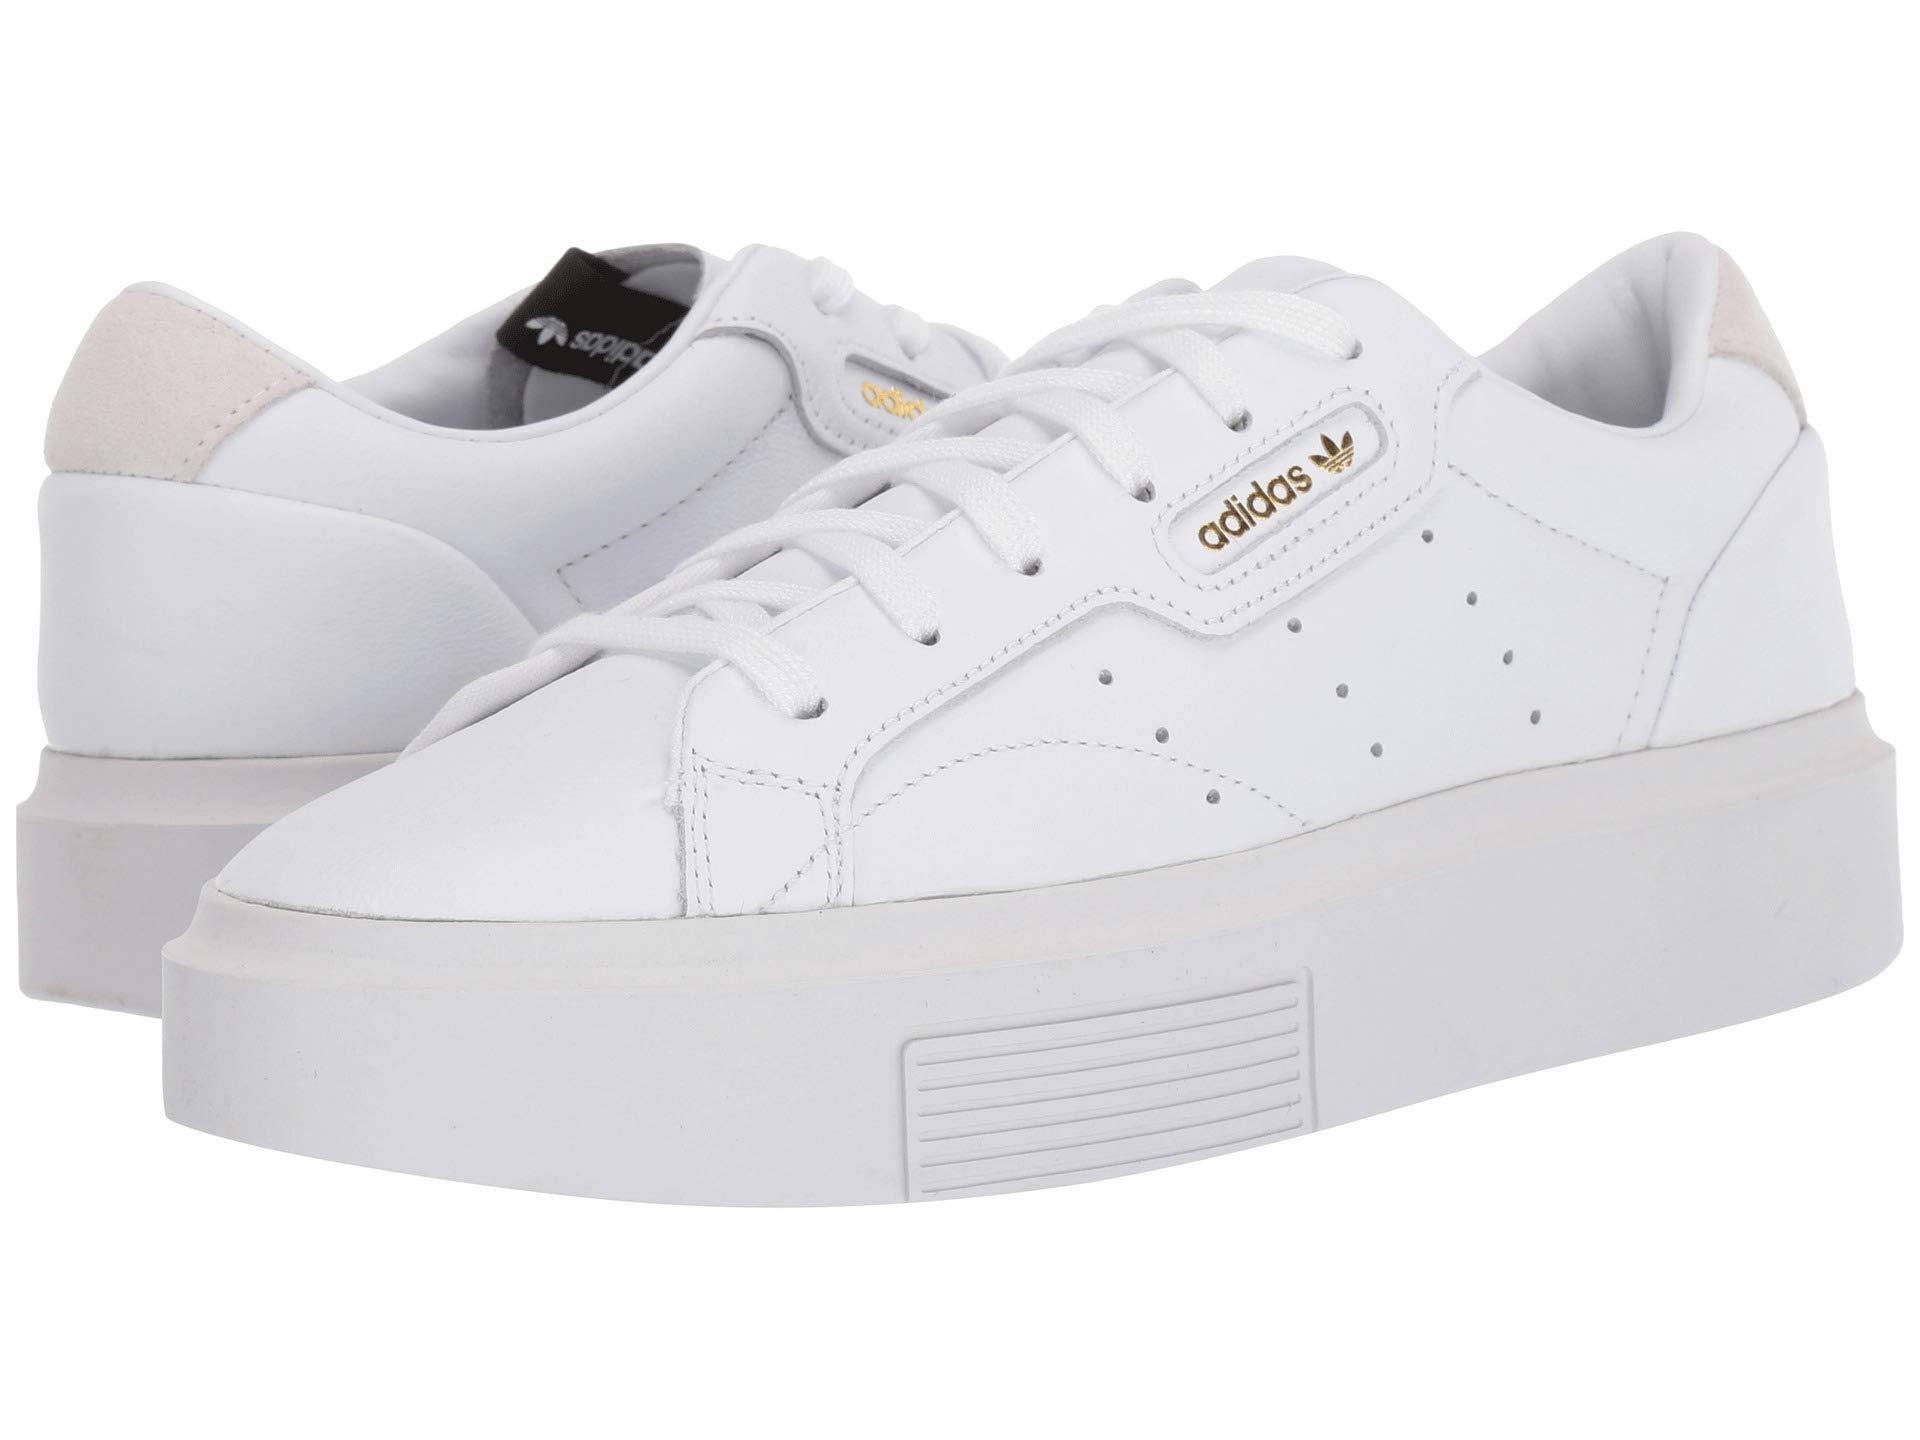 adidas Originals Leather Sleek Super in White/Crystal White/Black (White) -  Save 70% | Lyst